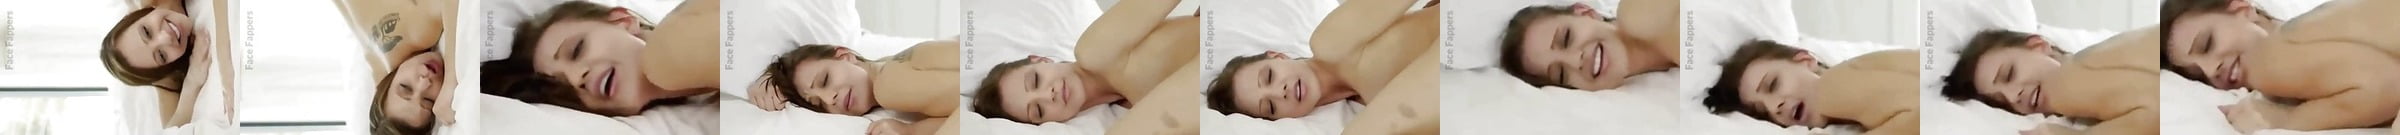 Kiara Advani Casting Sex Promo Free Porn E3 Xhamster